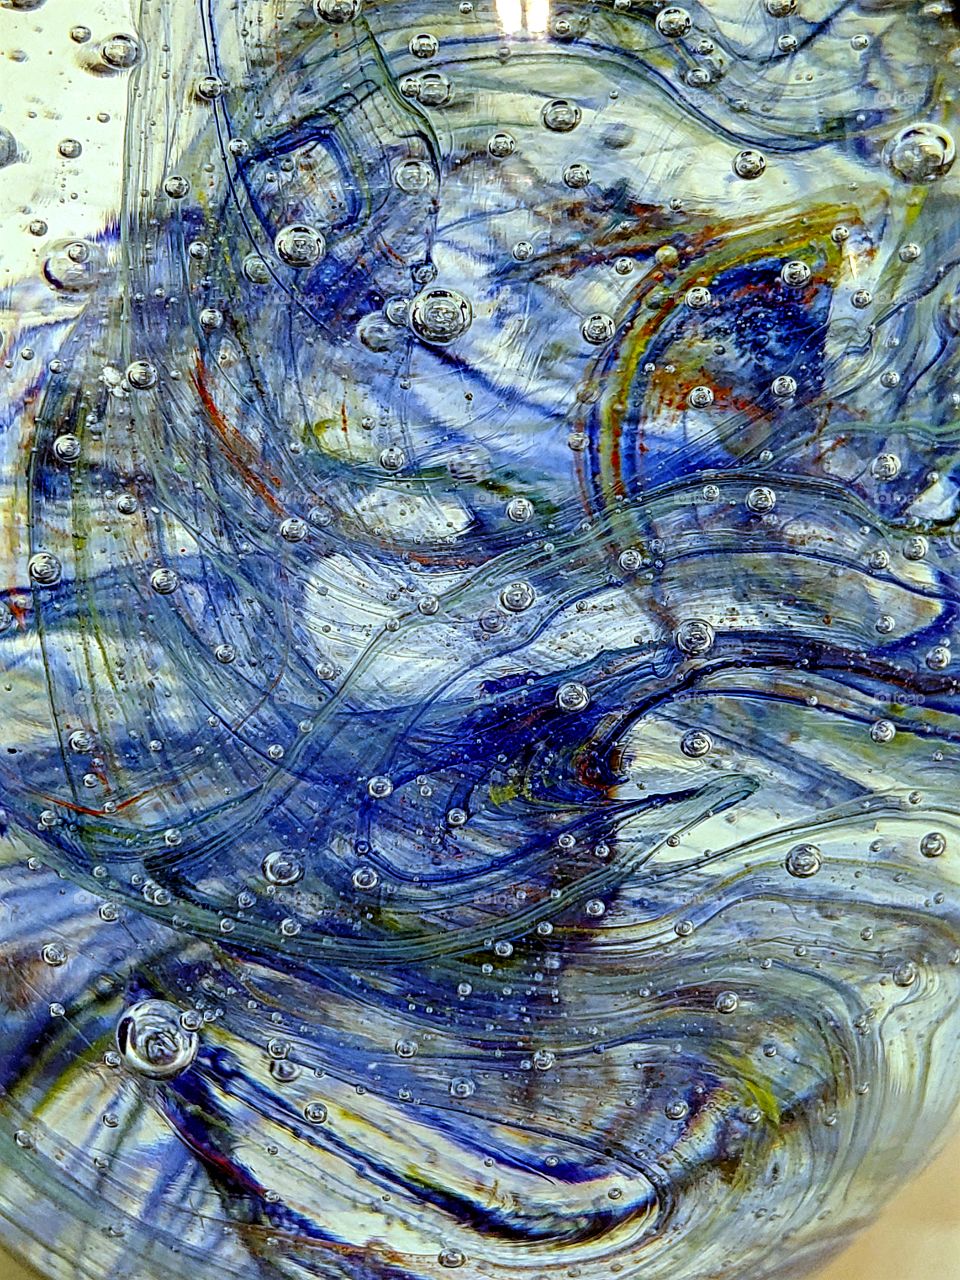 Blue Swirls in Glass!